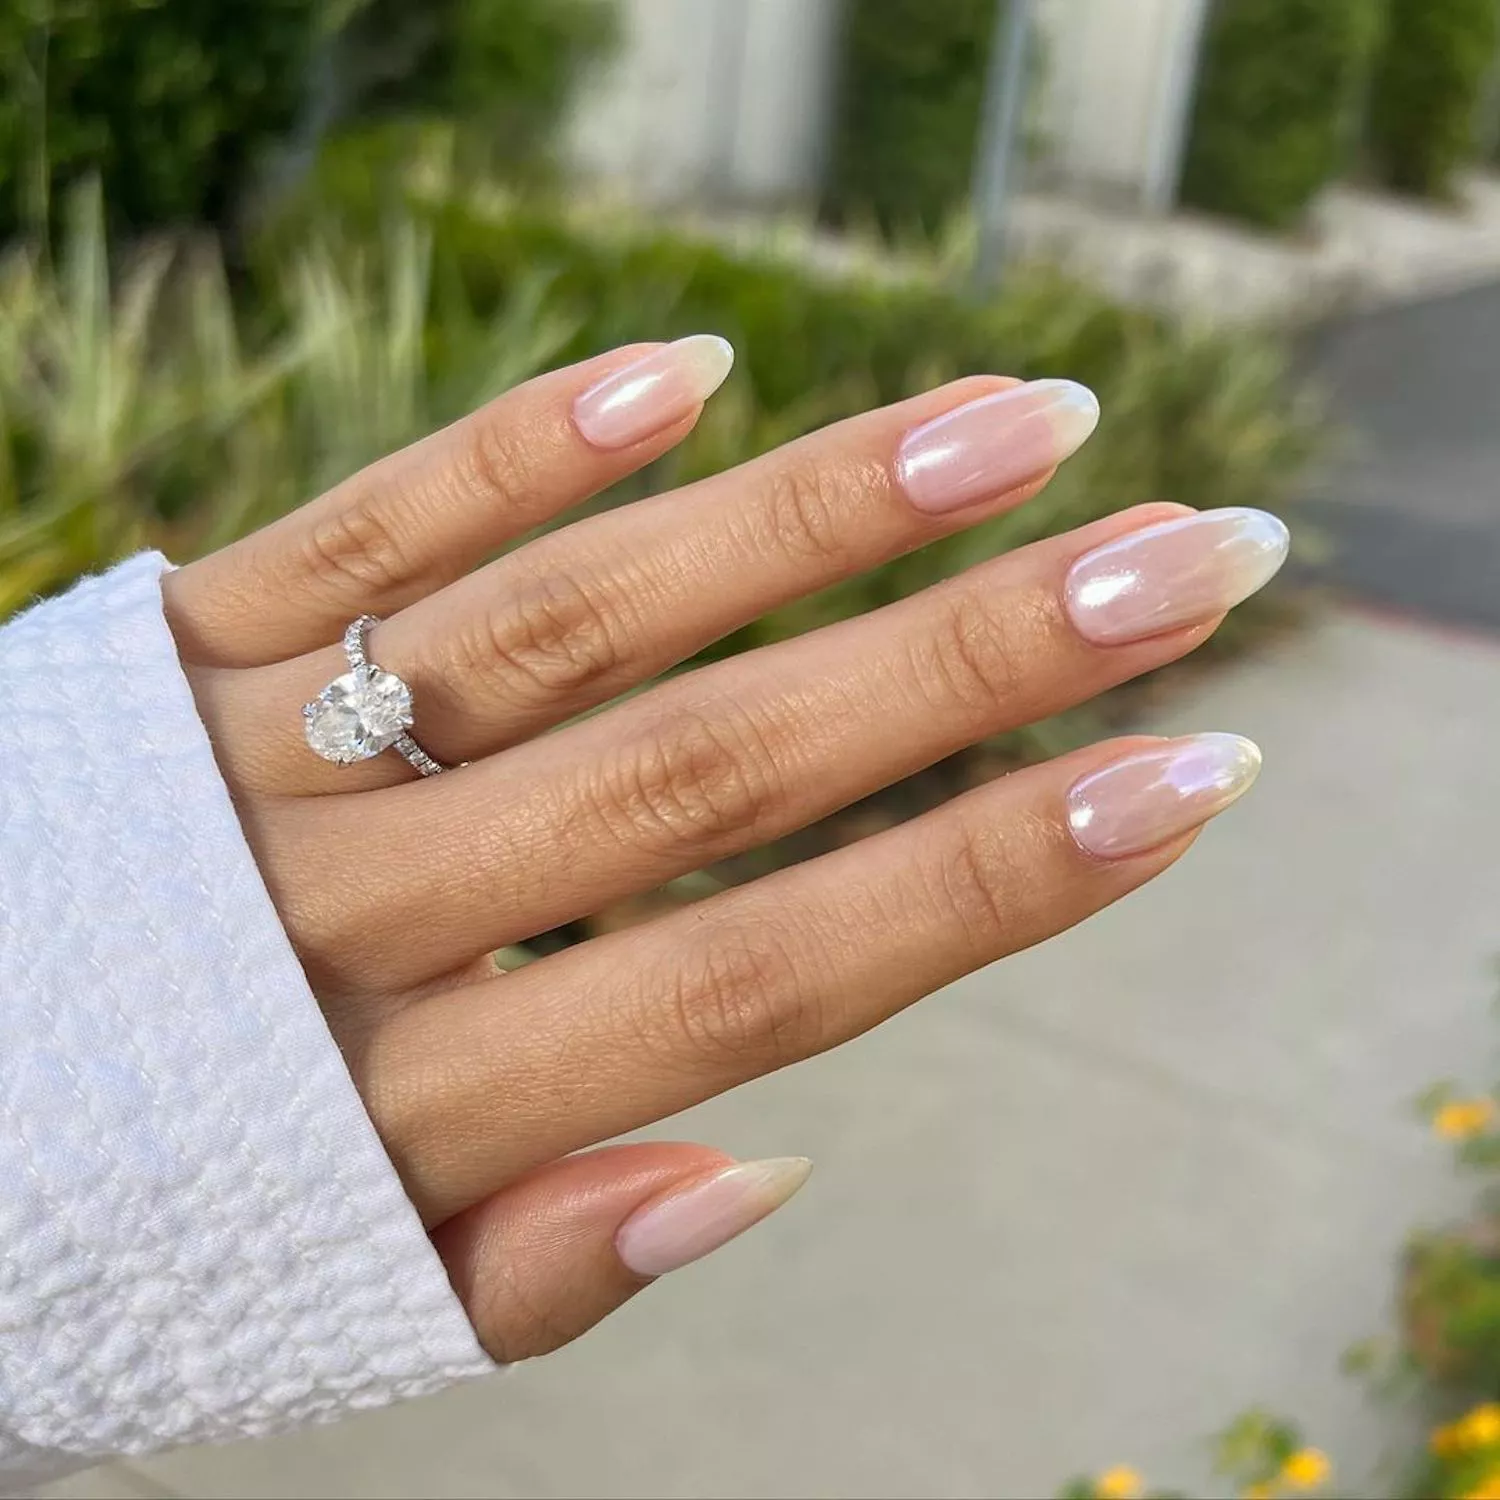 Glazed donut almond-shaped nails